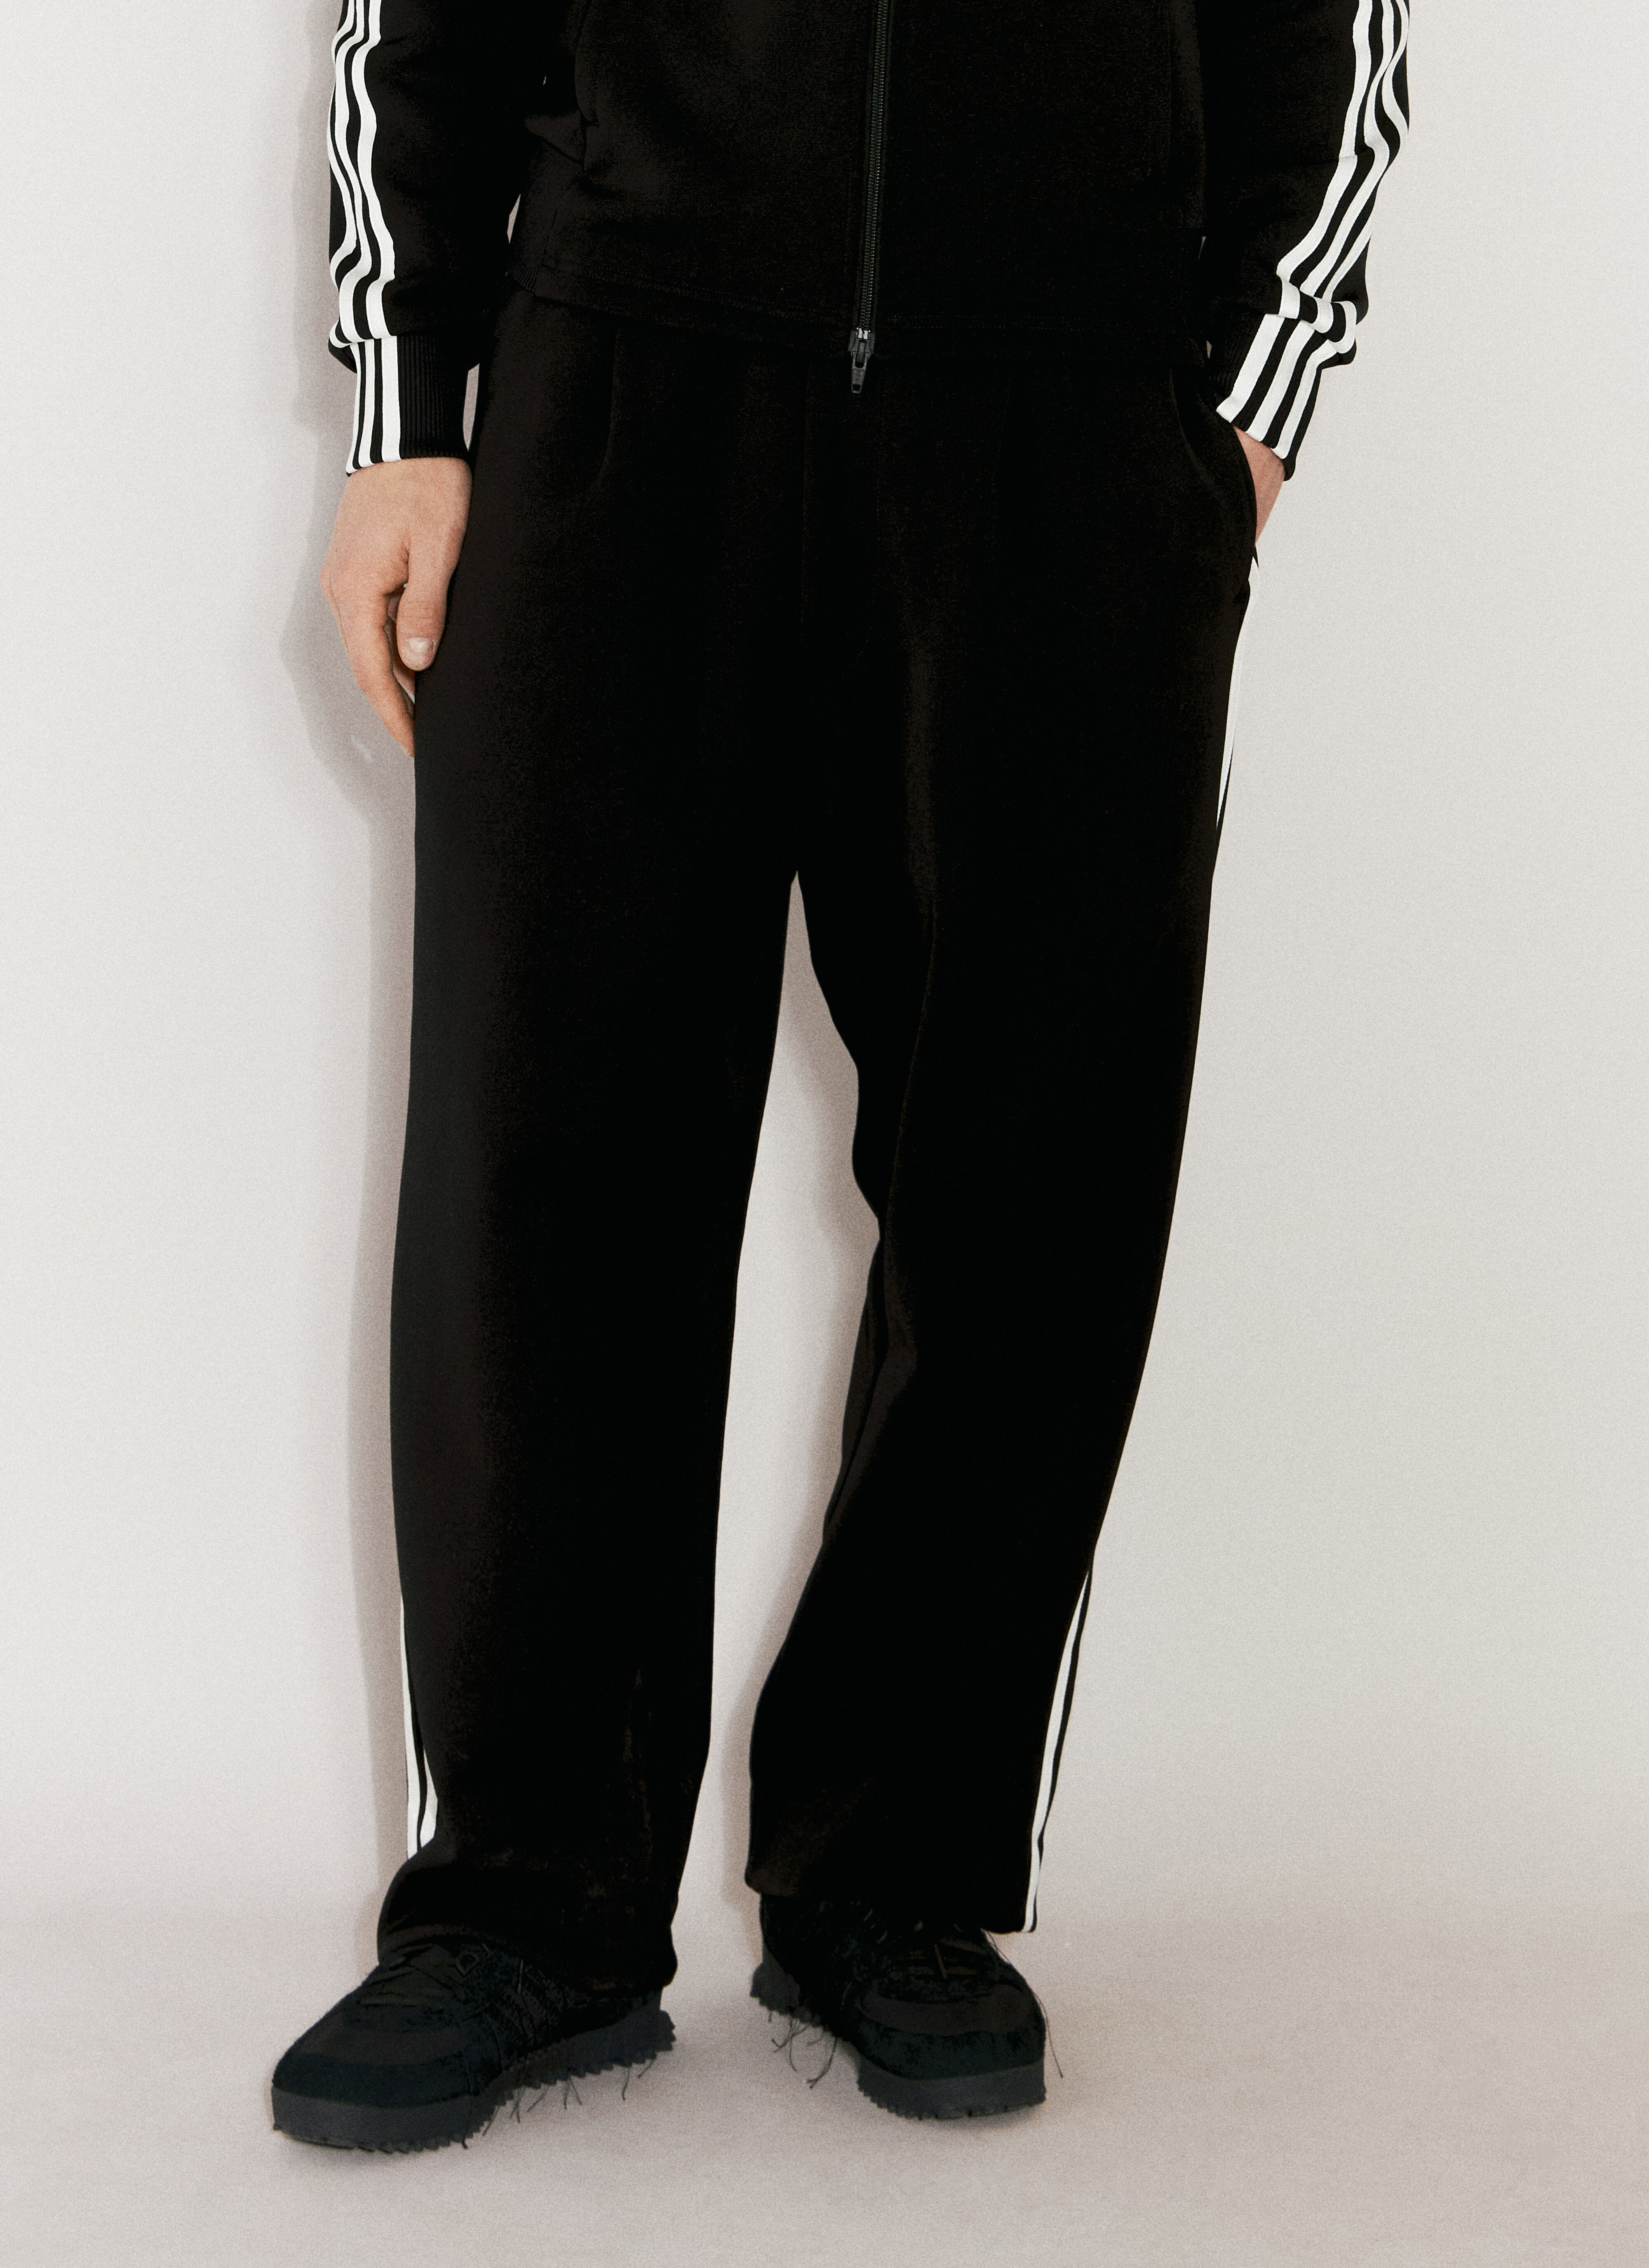 Y-3 x Real Madrid 三条纹运动长裤  黑色 rma0156014